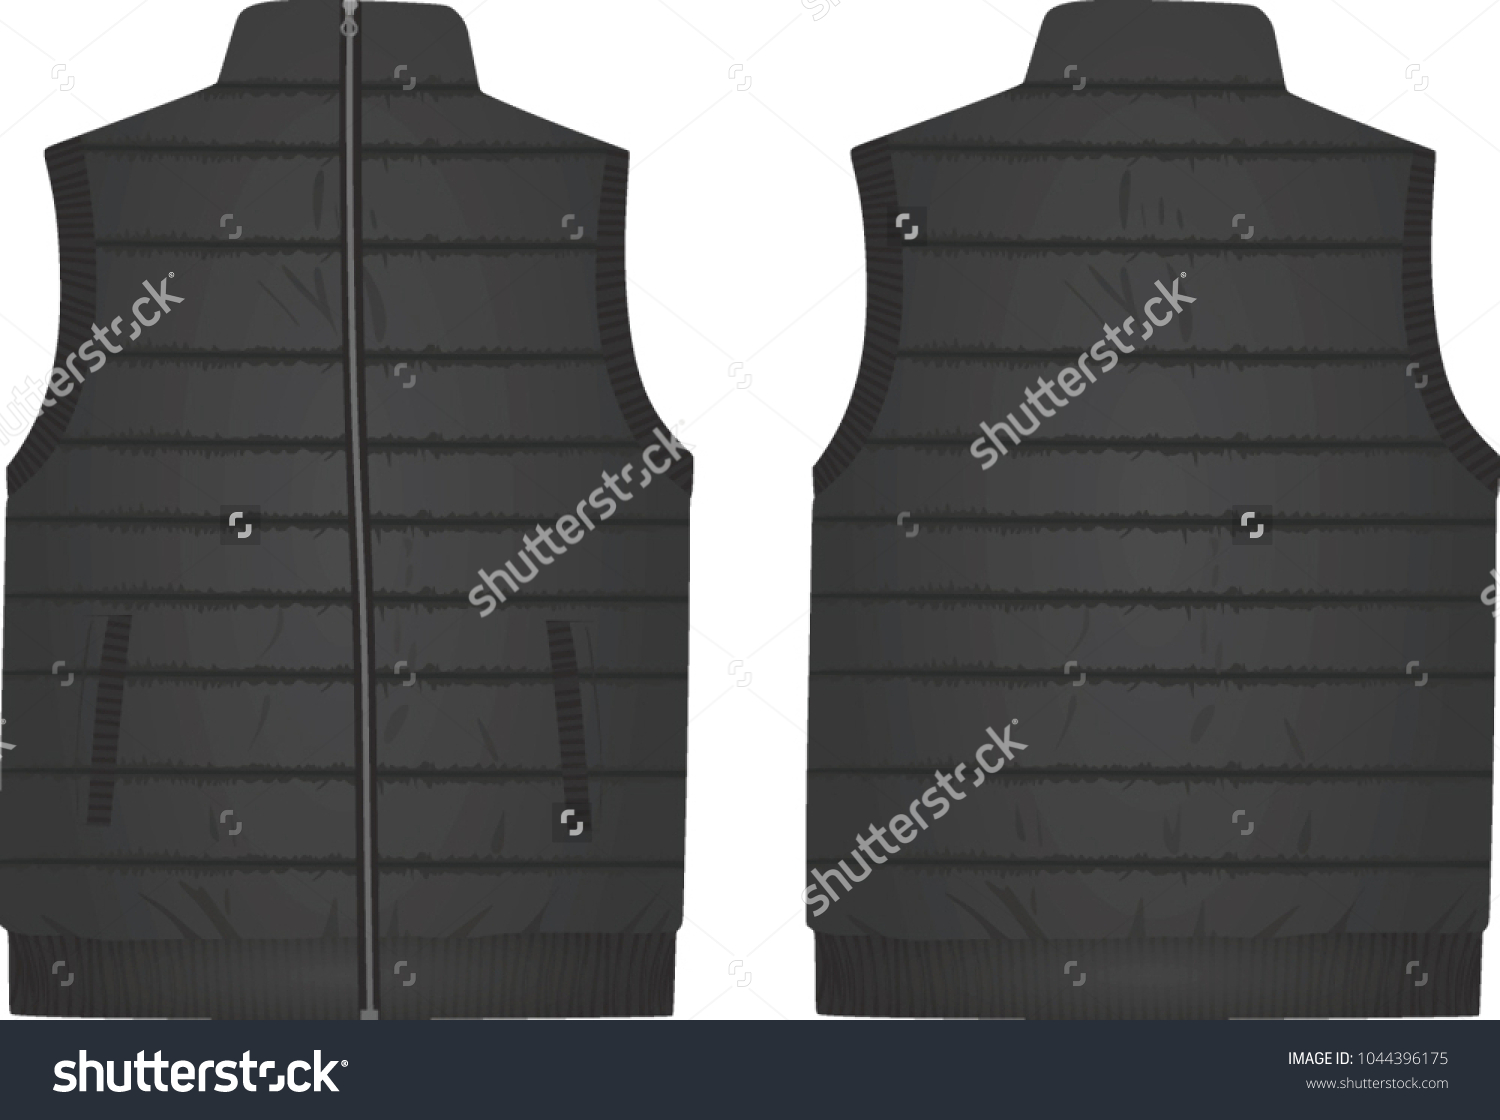 4,082 Jacket vest template Images, Stock Photos & Vectors | Shutterstock